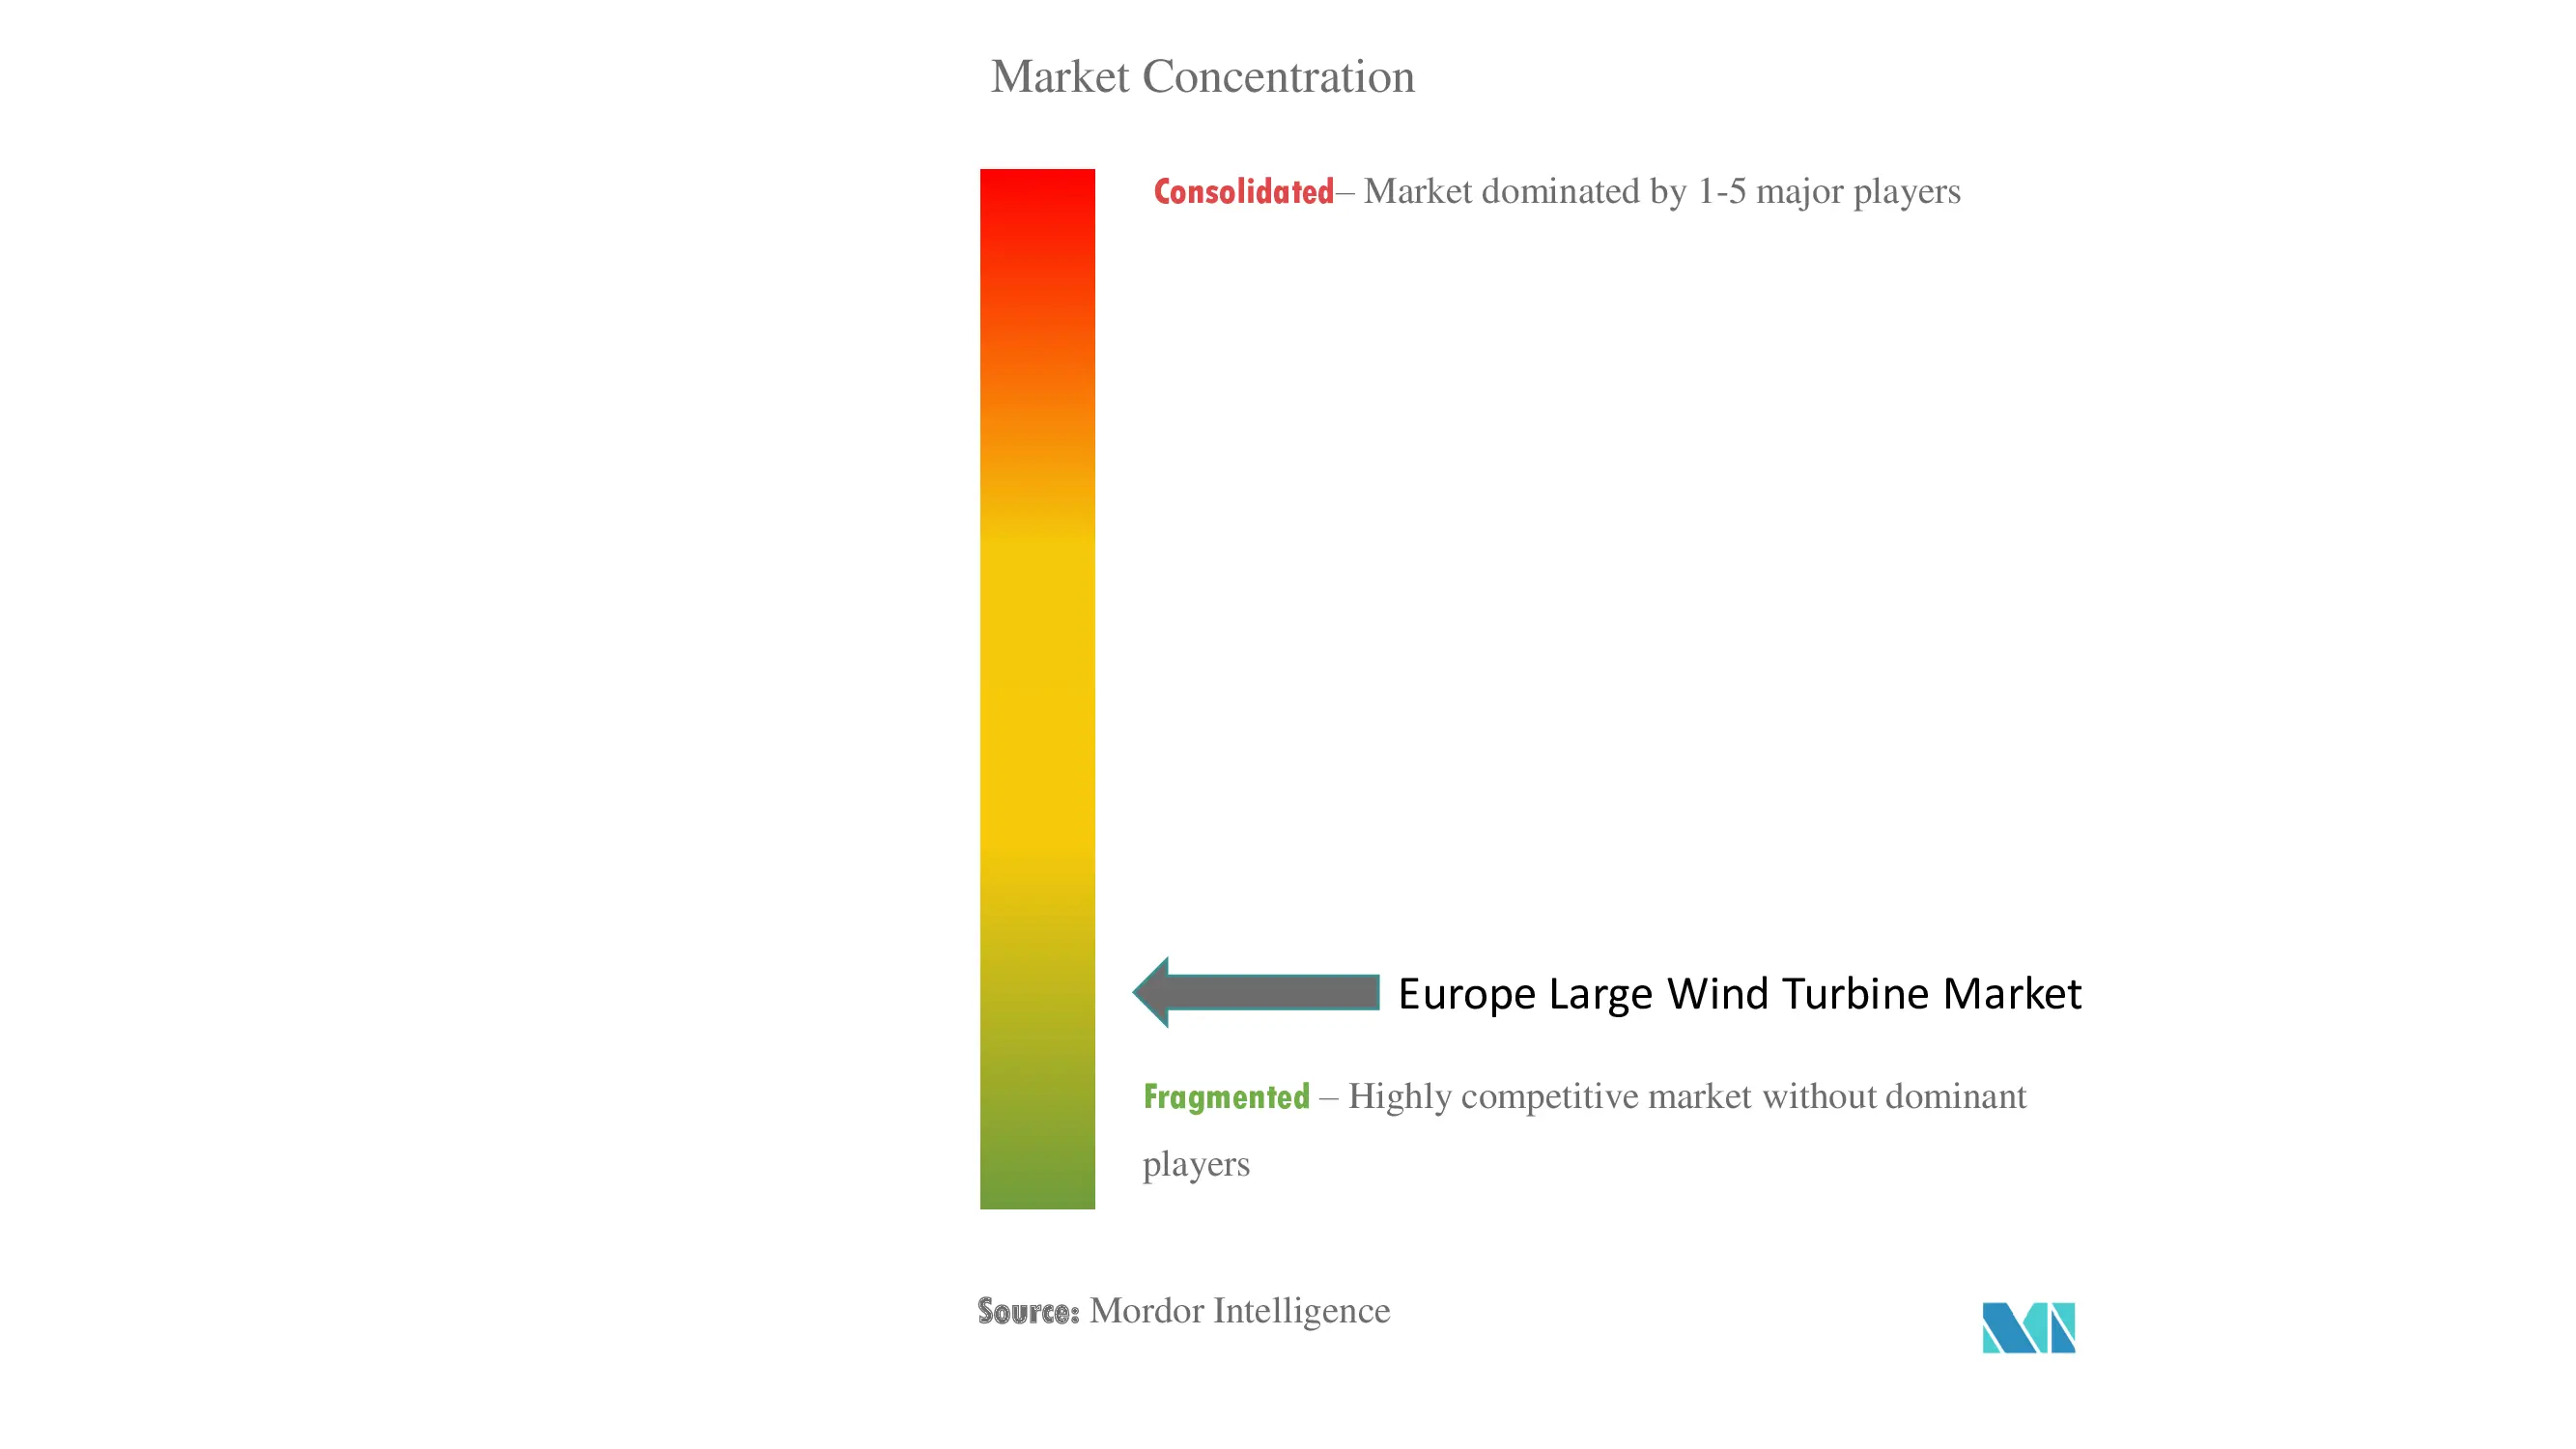 Europe Large Wind Turbine Market Concentration